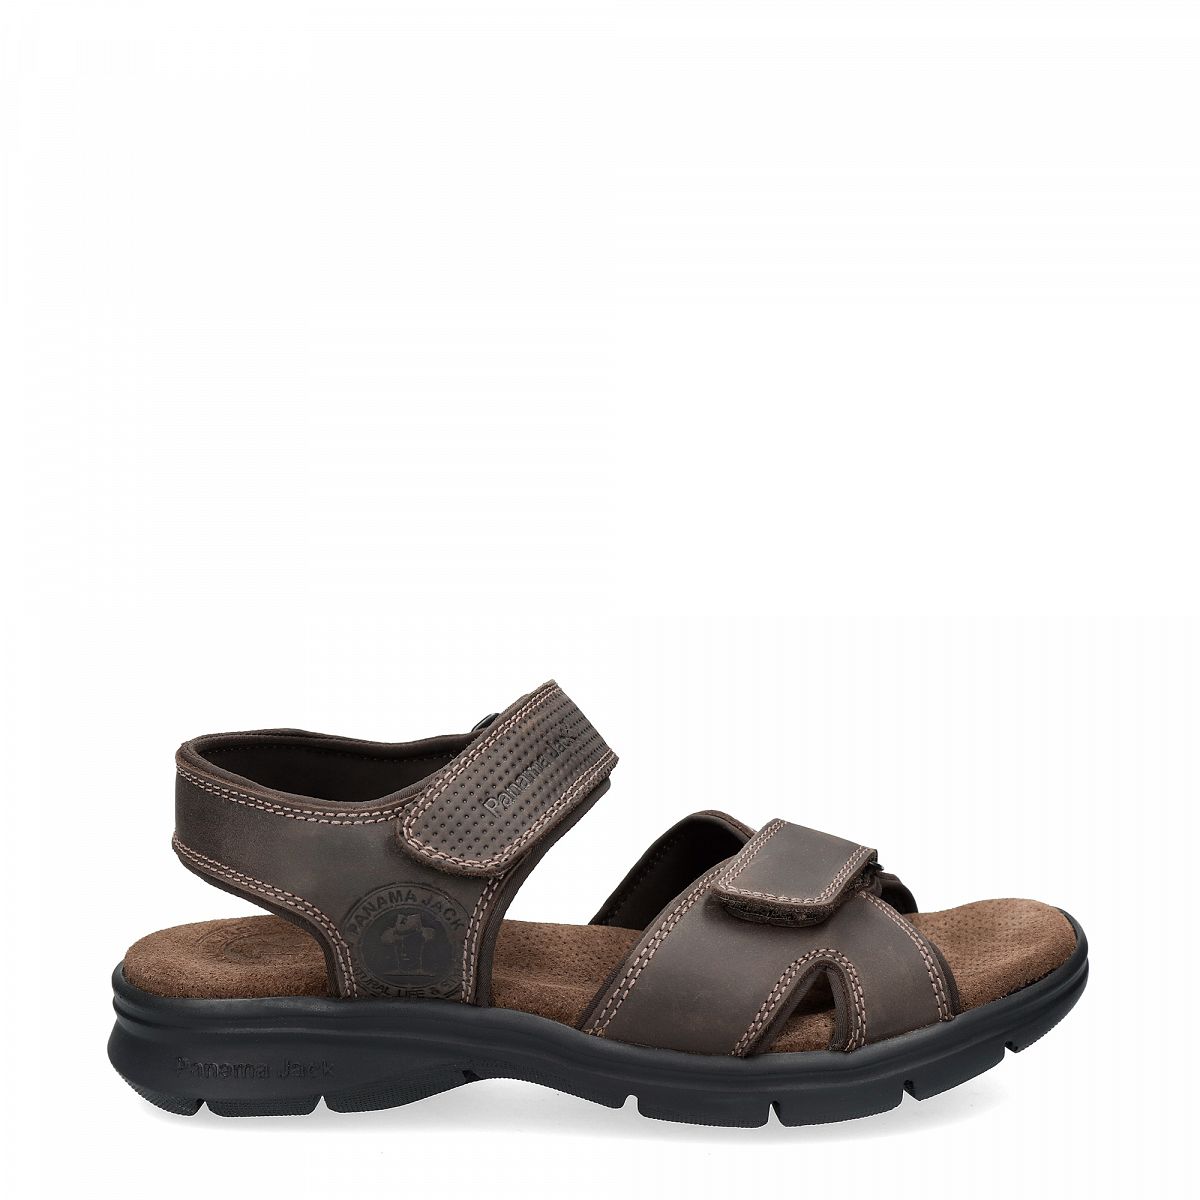 Men's sandals SANDERS BASICS brown | PANAMA JACK®